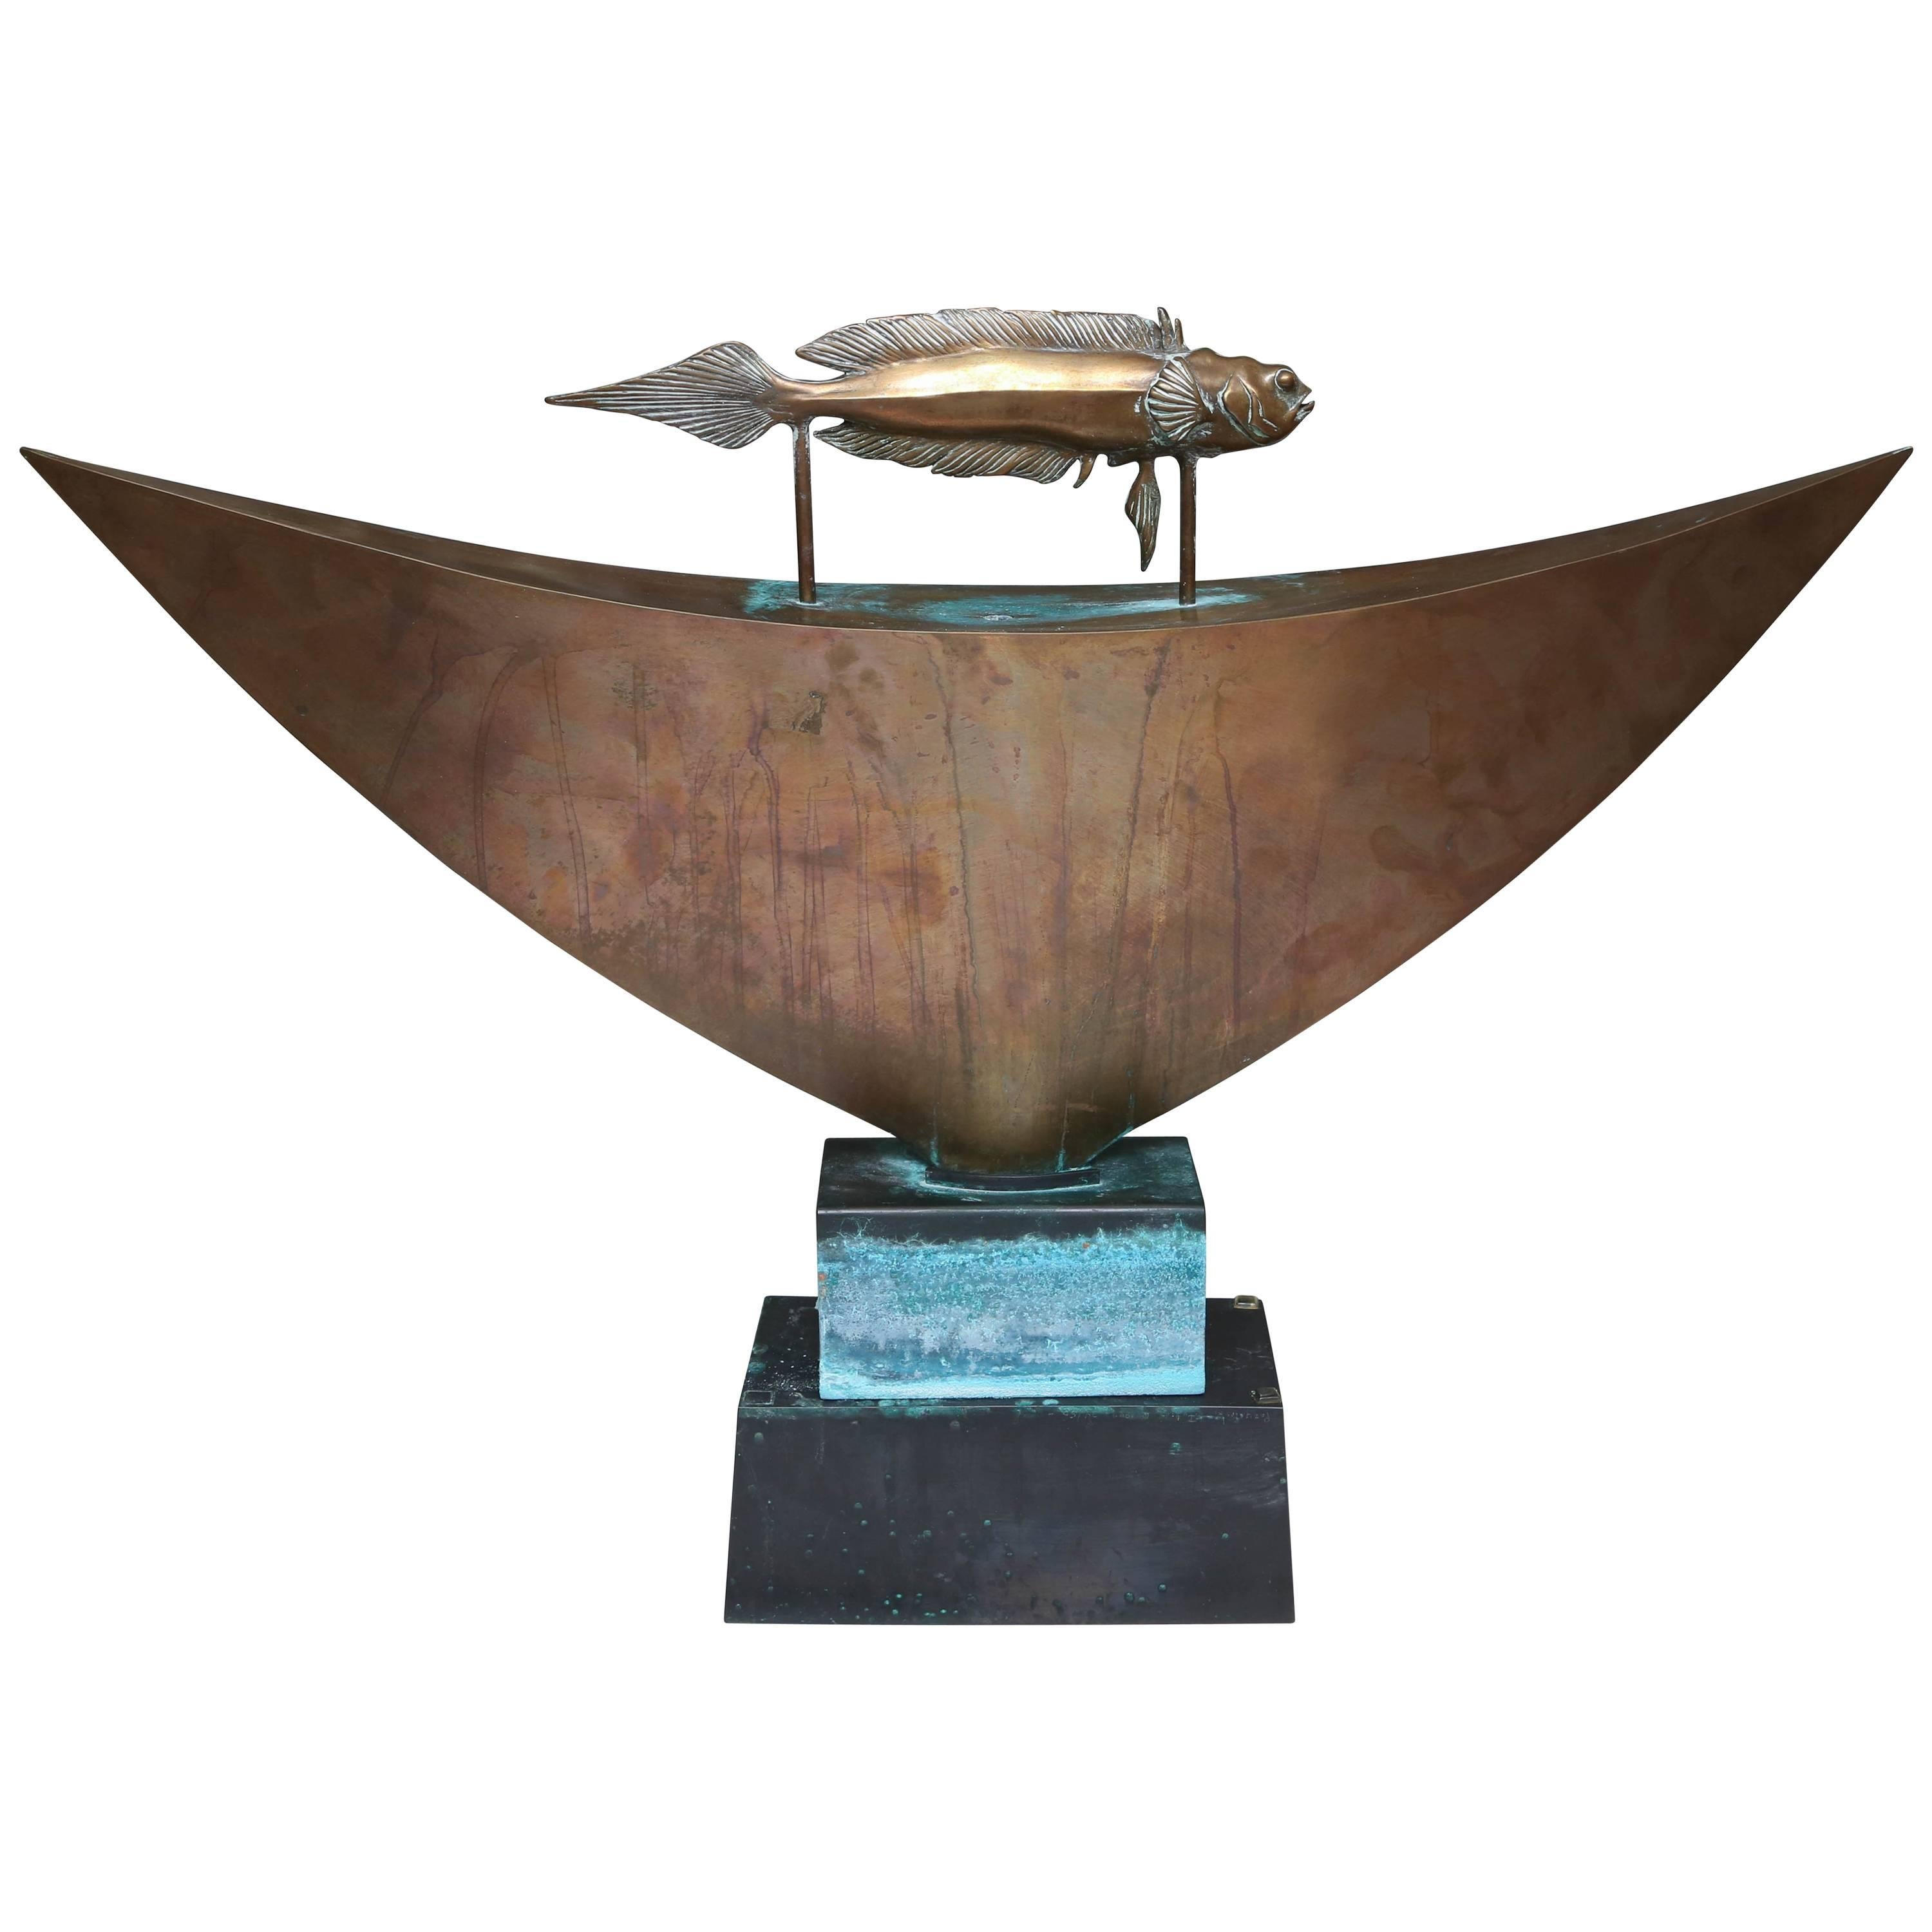 Pozycinski Studios Bronze Fish Fountain